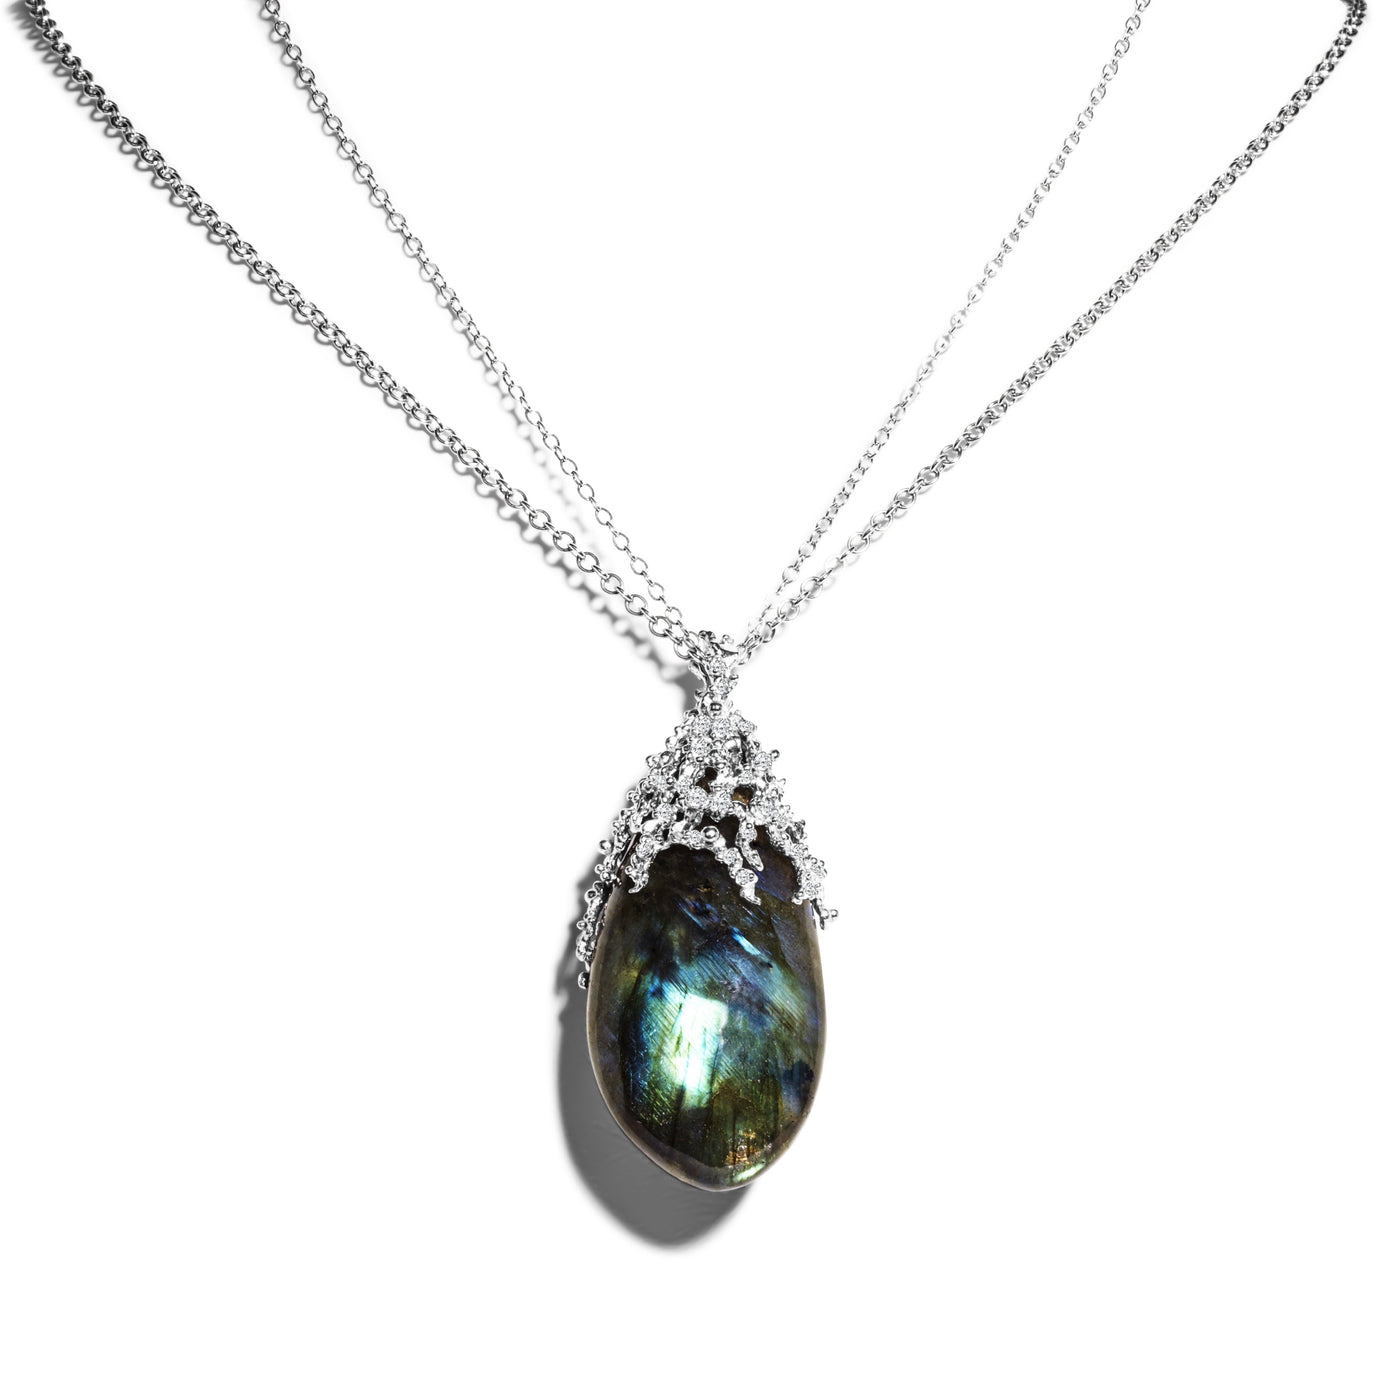 Ocean Pendant Necklace with Labradorite and Diamonds